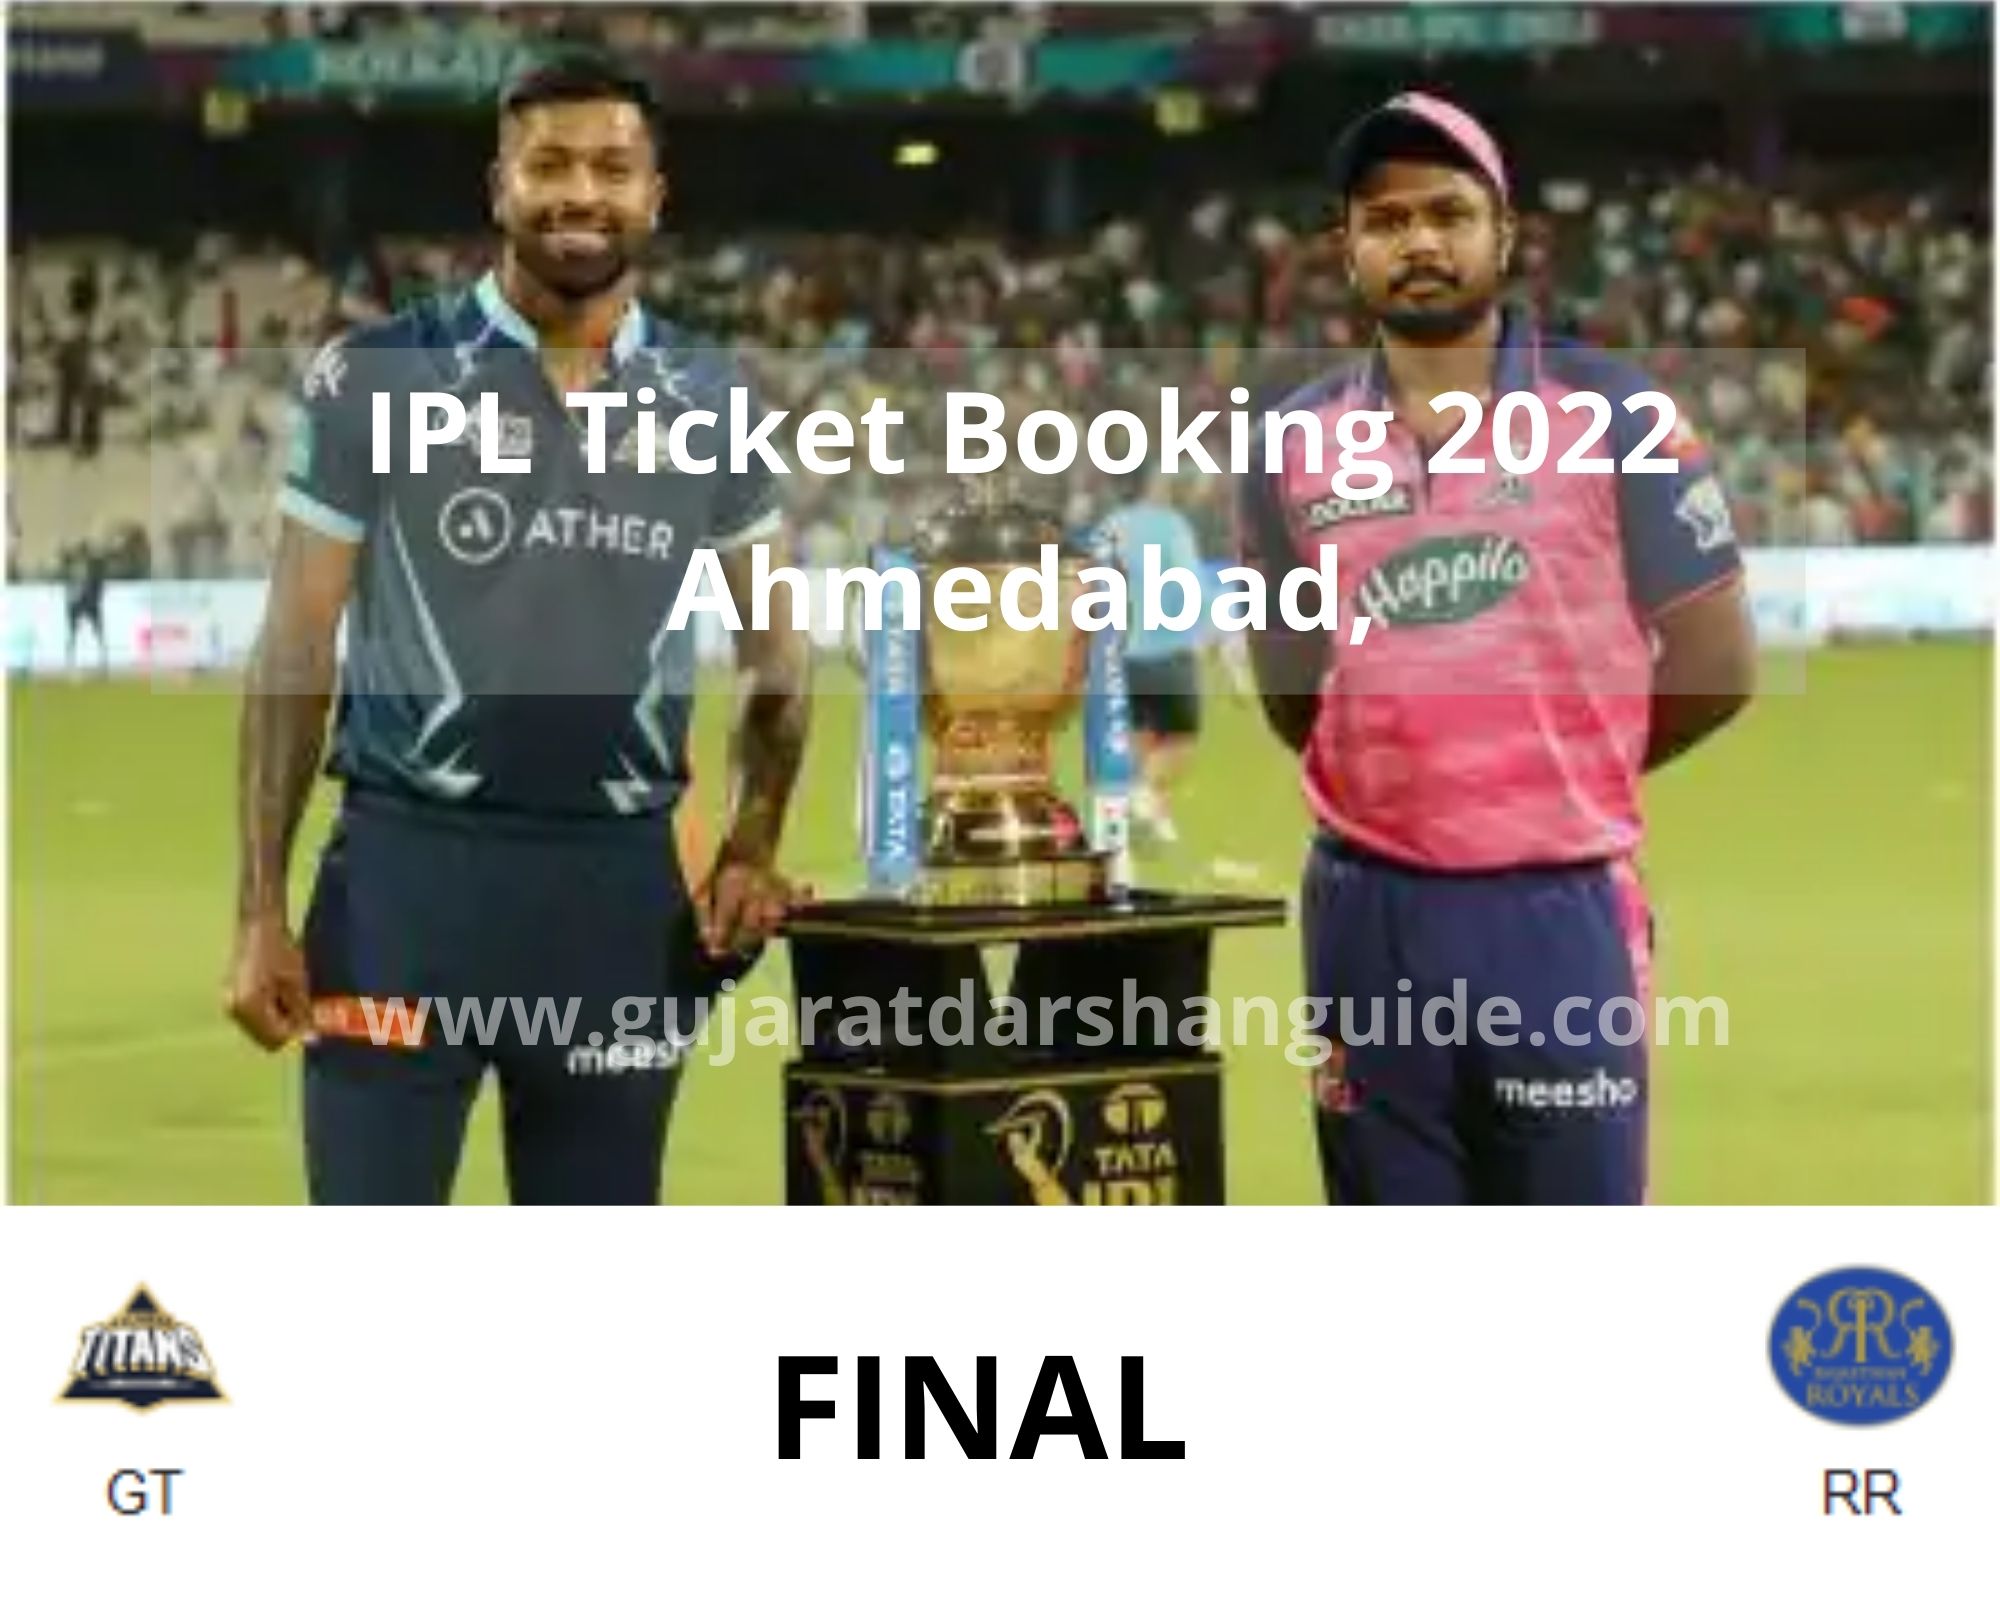 IPL Ticket Booking 2022 Ahmedabad, Ticket Price, Online Booking